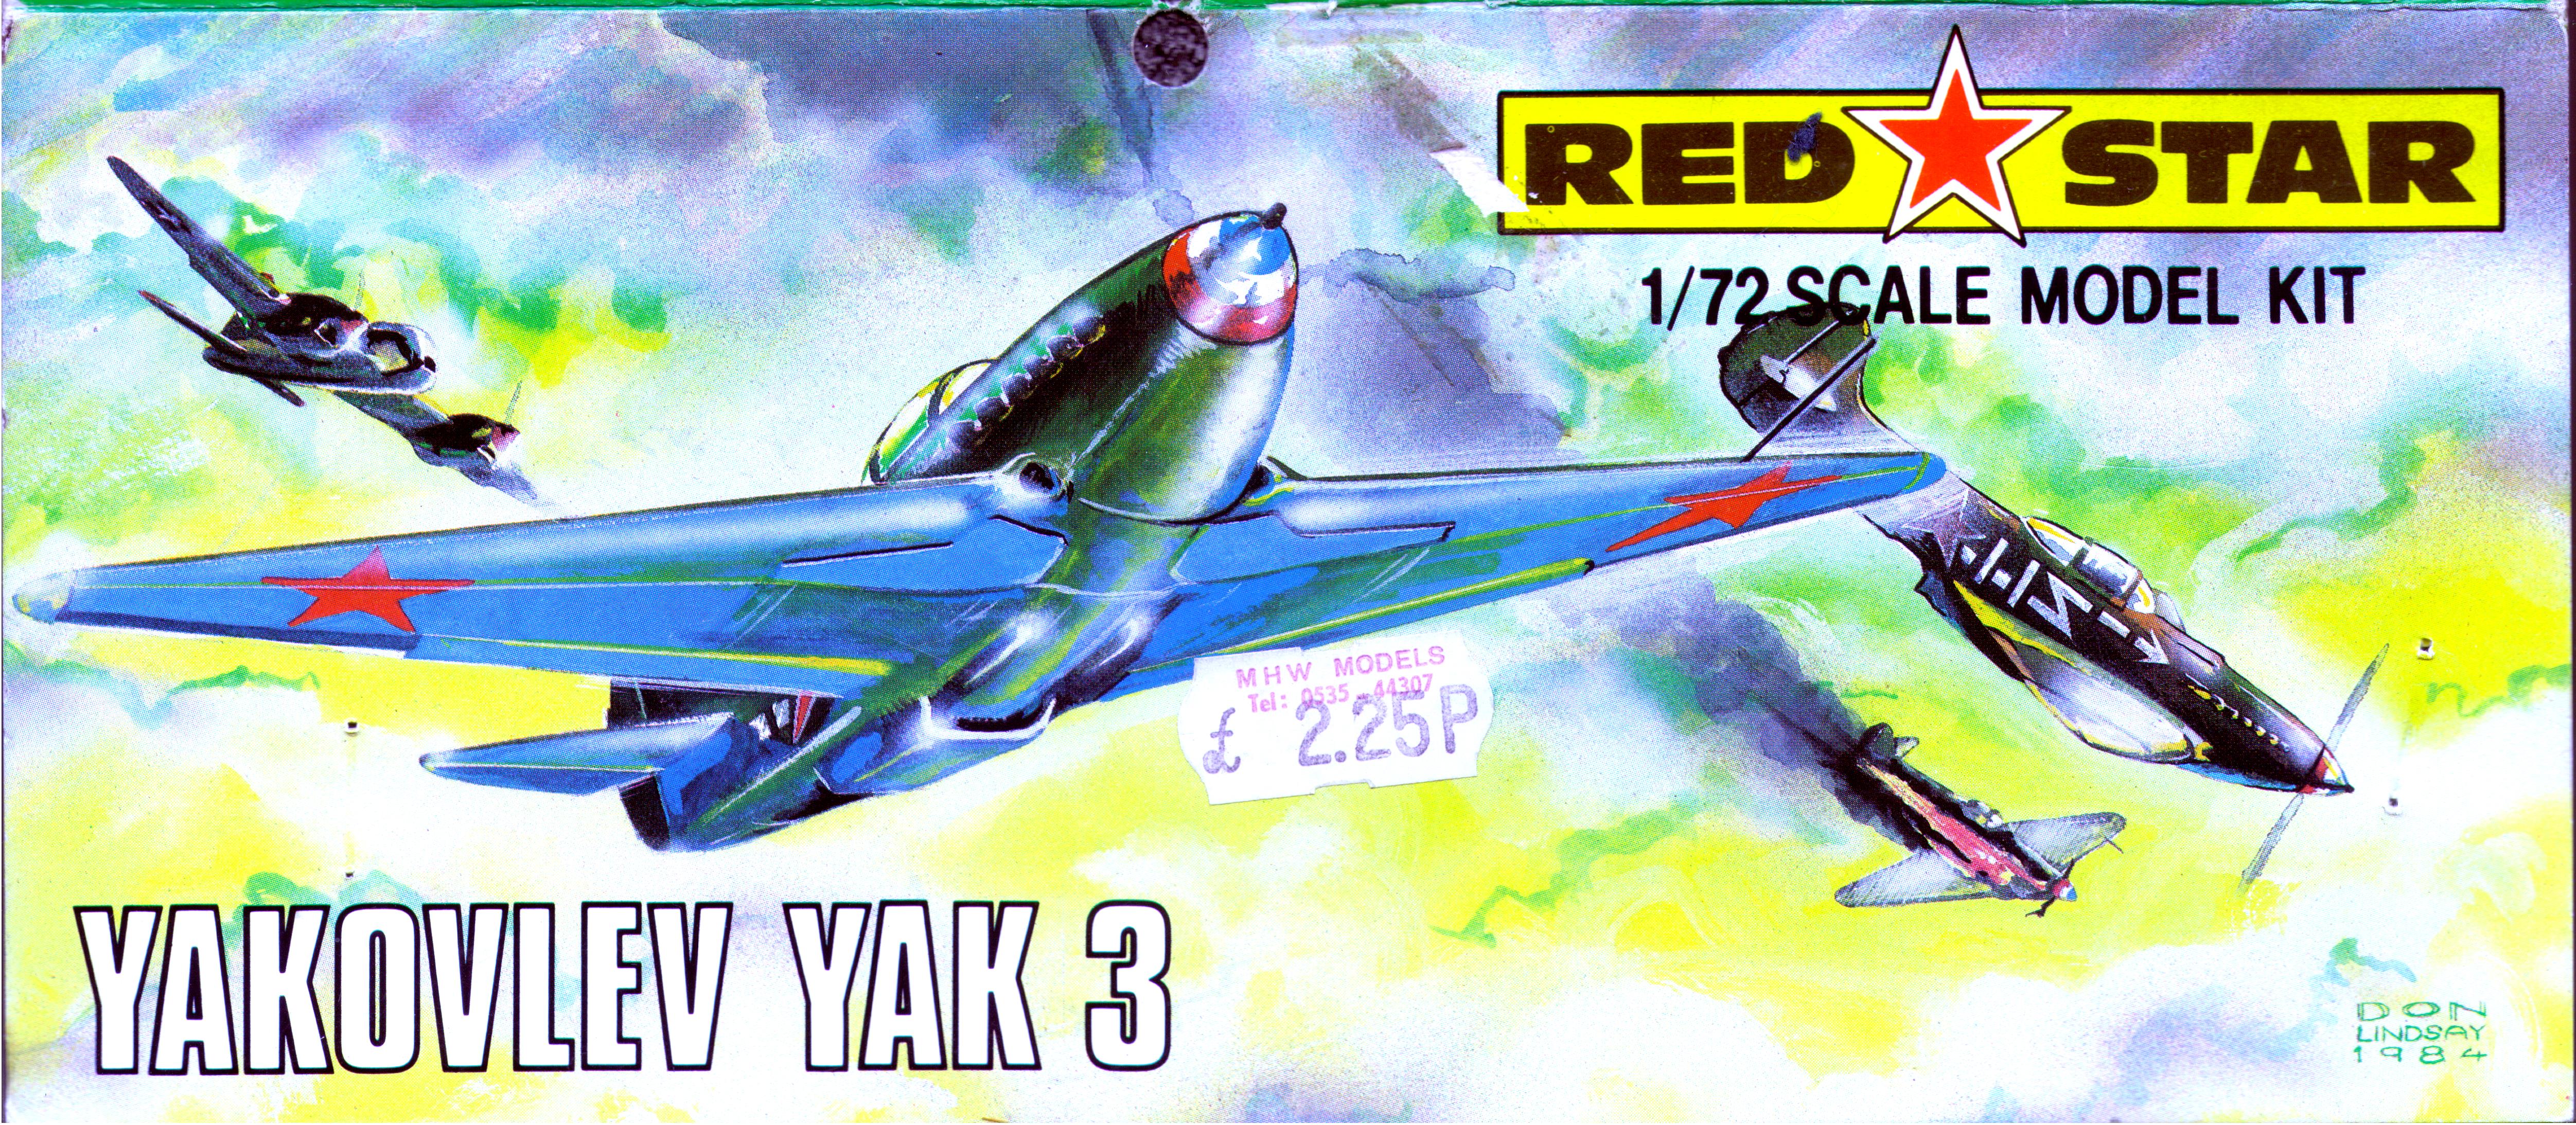 Red Star RS103 Yakovlev Yak-3, Red Star Model Kits Ltd, 1984 Header card